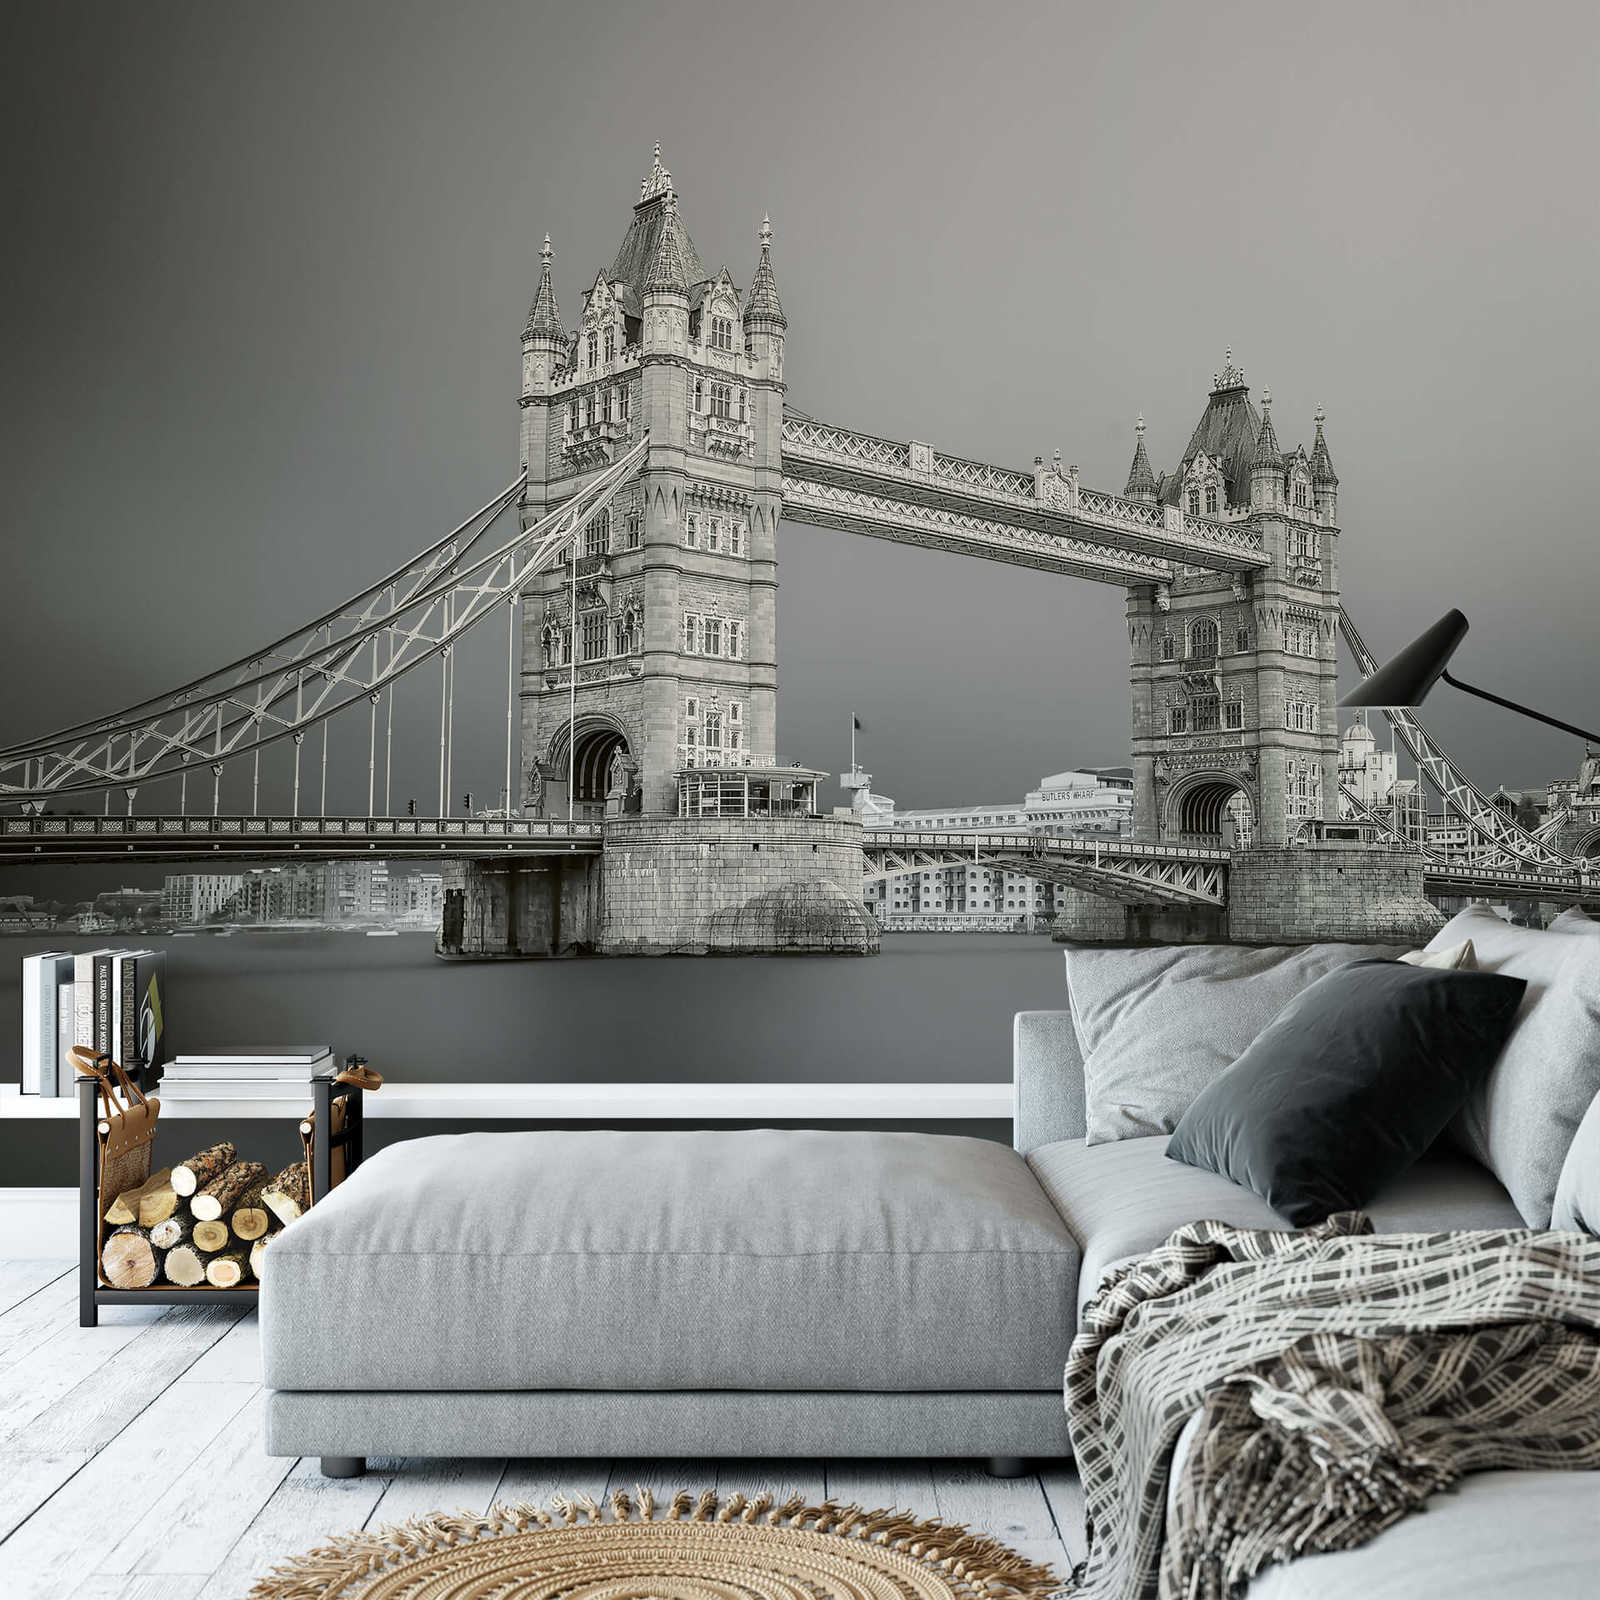             Fototapete Tower Bridge London – Grau, Weiß, Schwarz
        